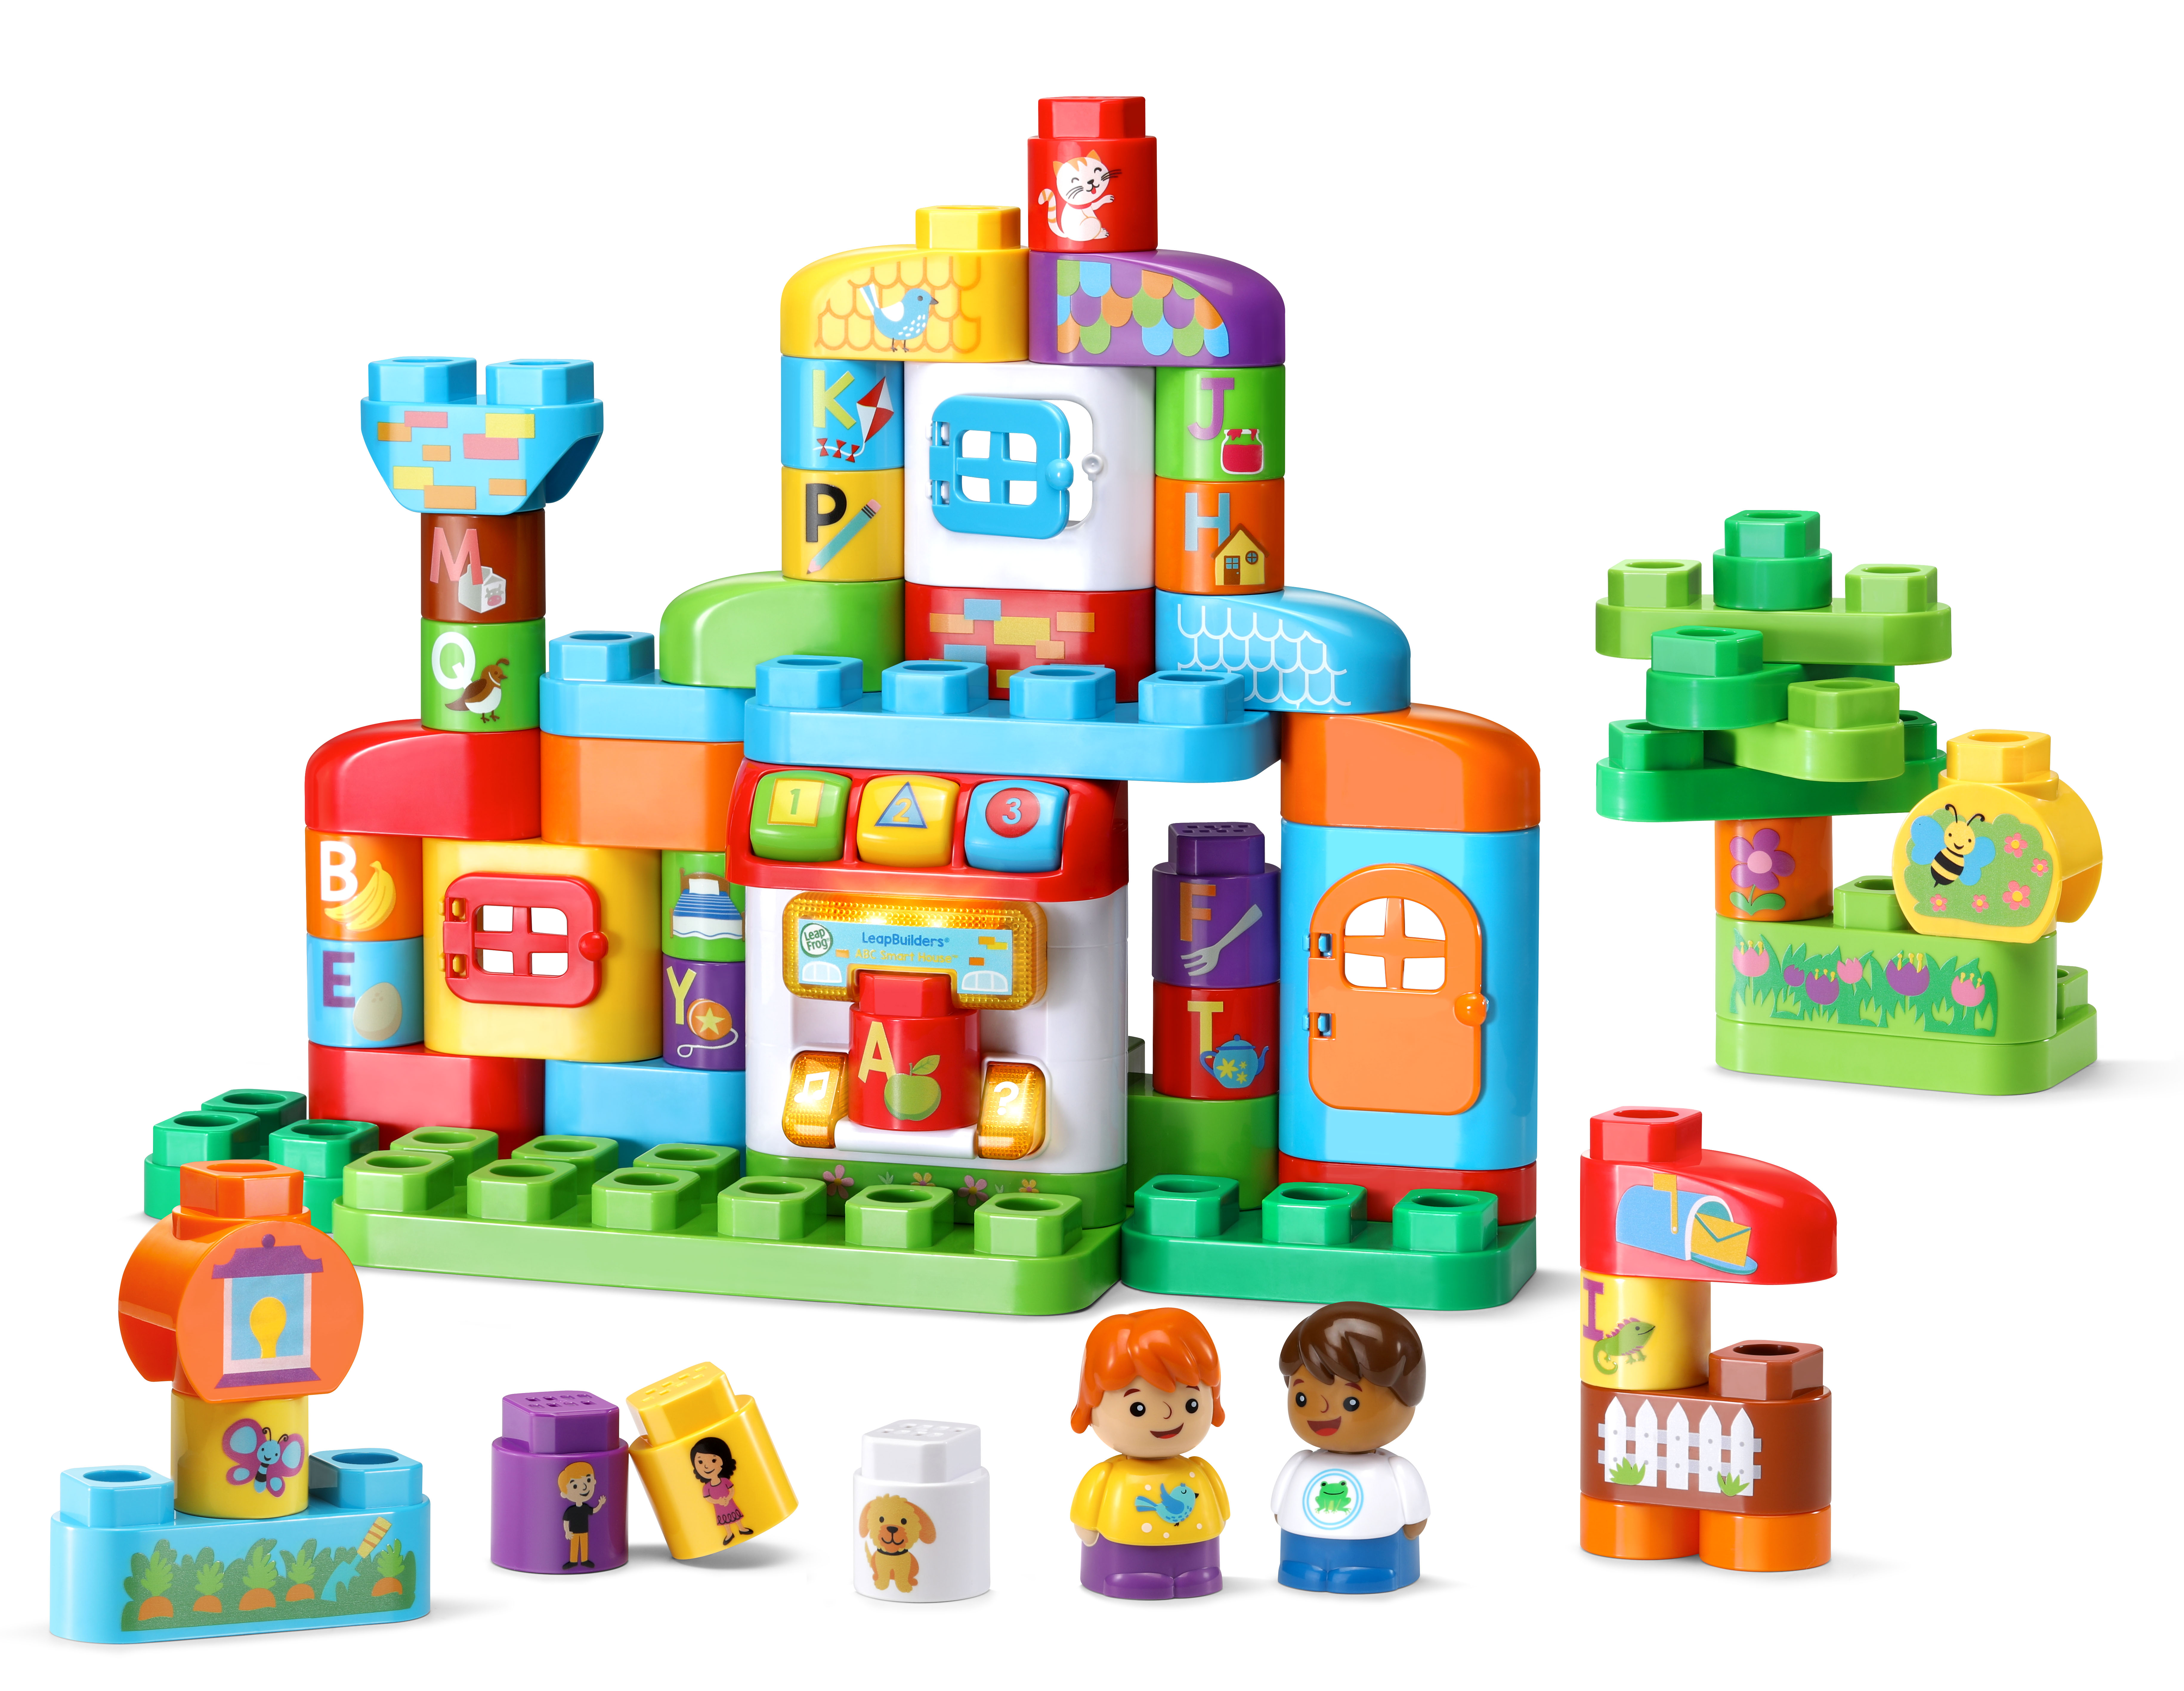 cheap building blocks toys